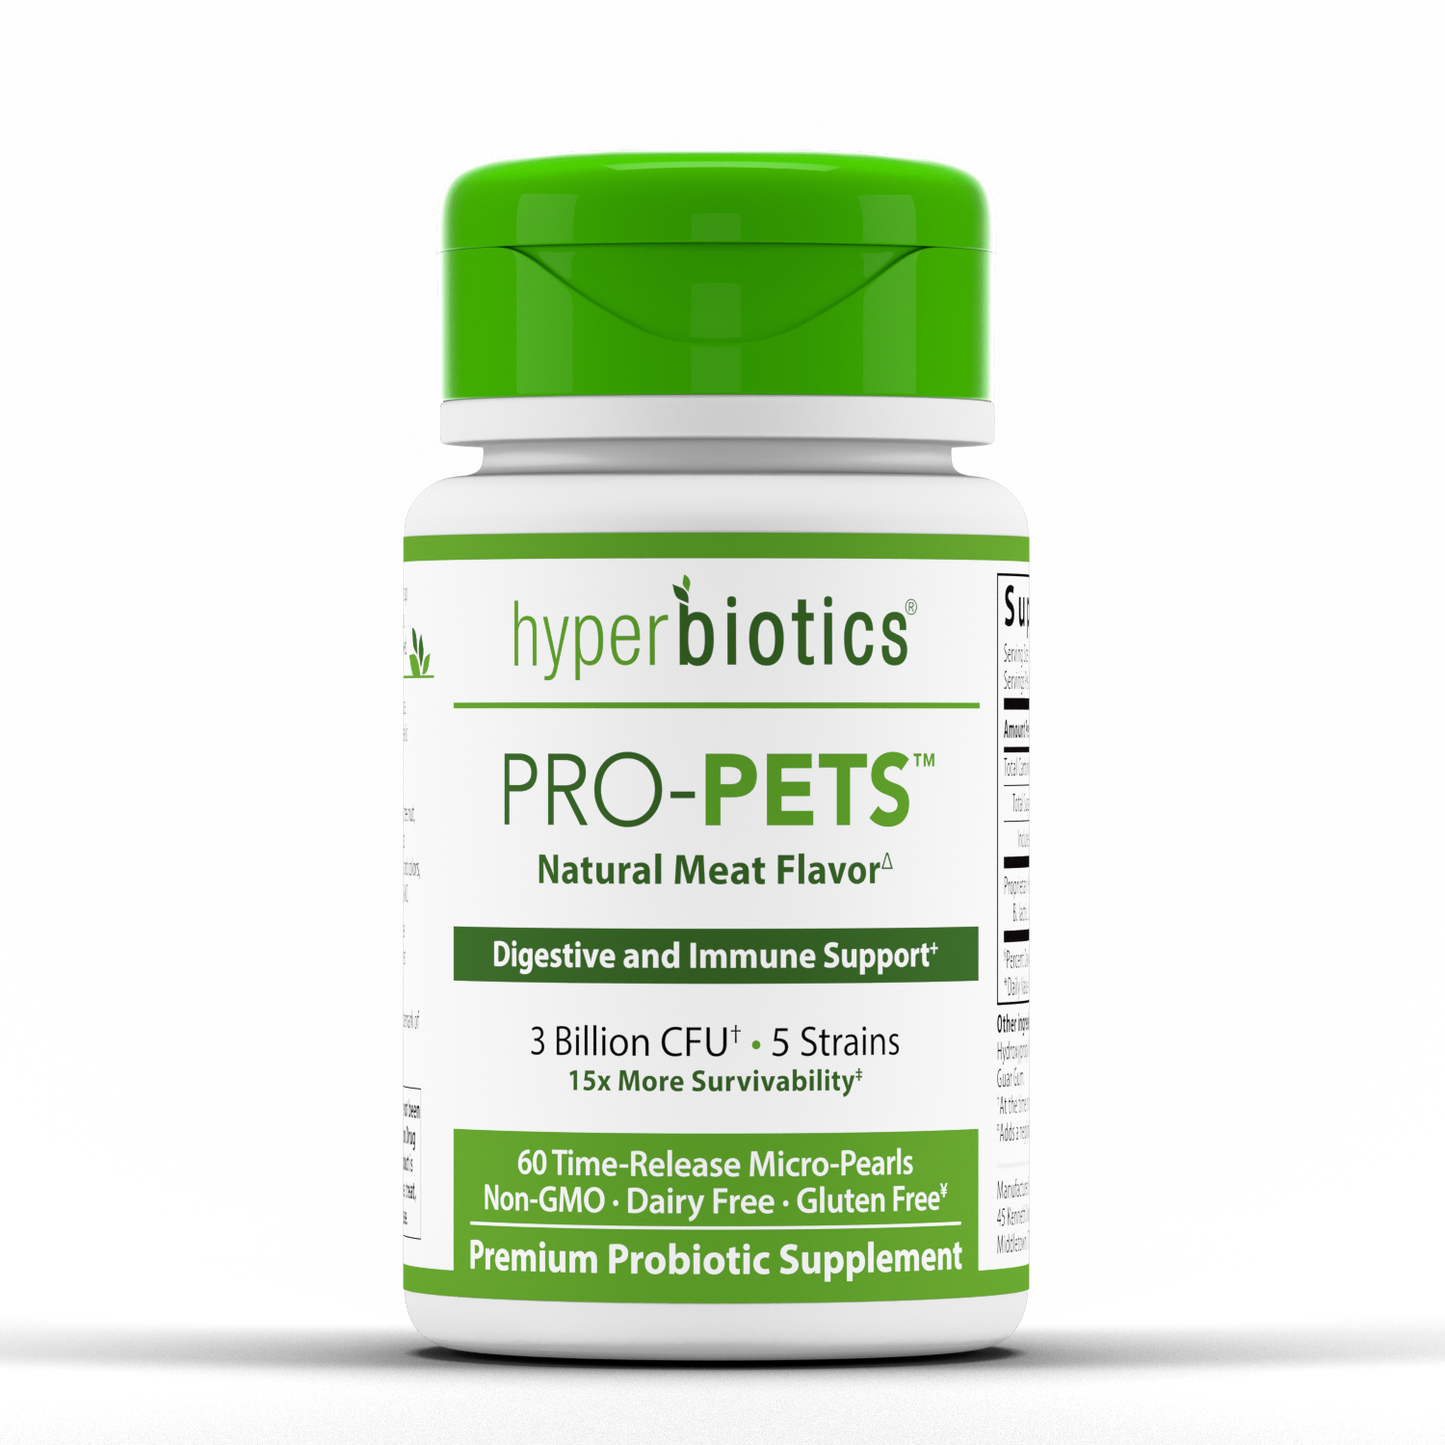 Hyperbiotics PRO-PETS bottle image